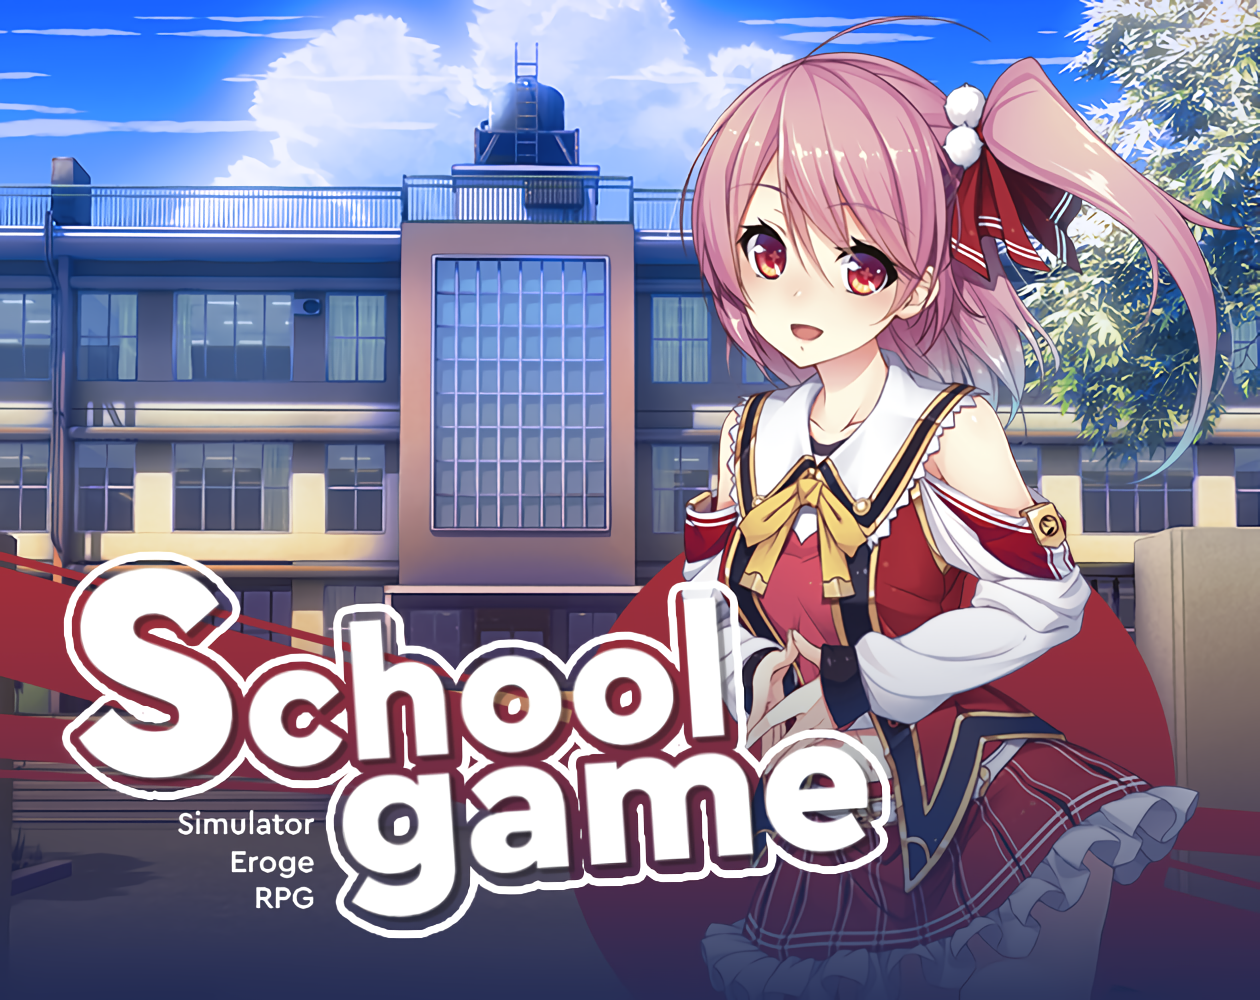 School Game / Sandbox, Simulator, RPG by Kaito